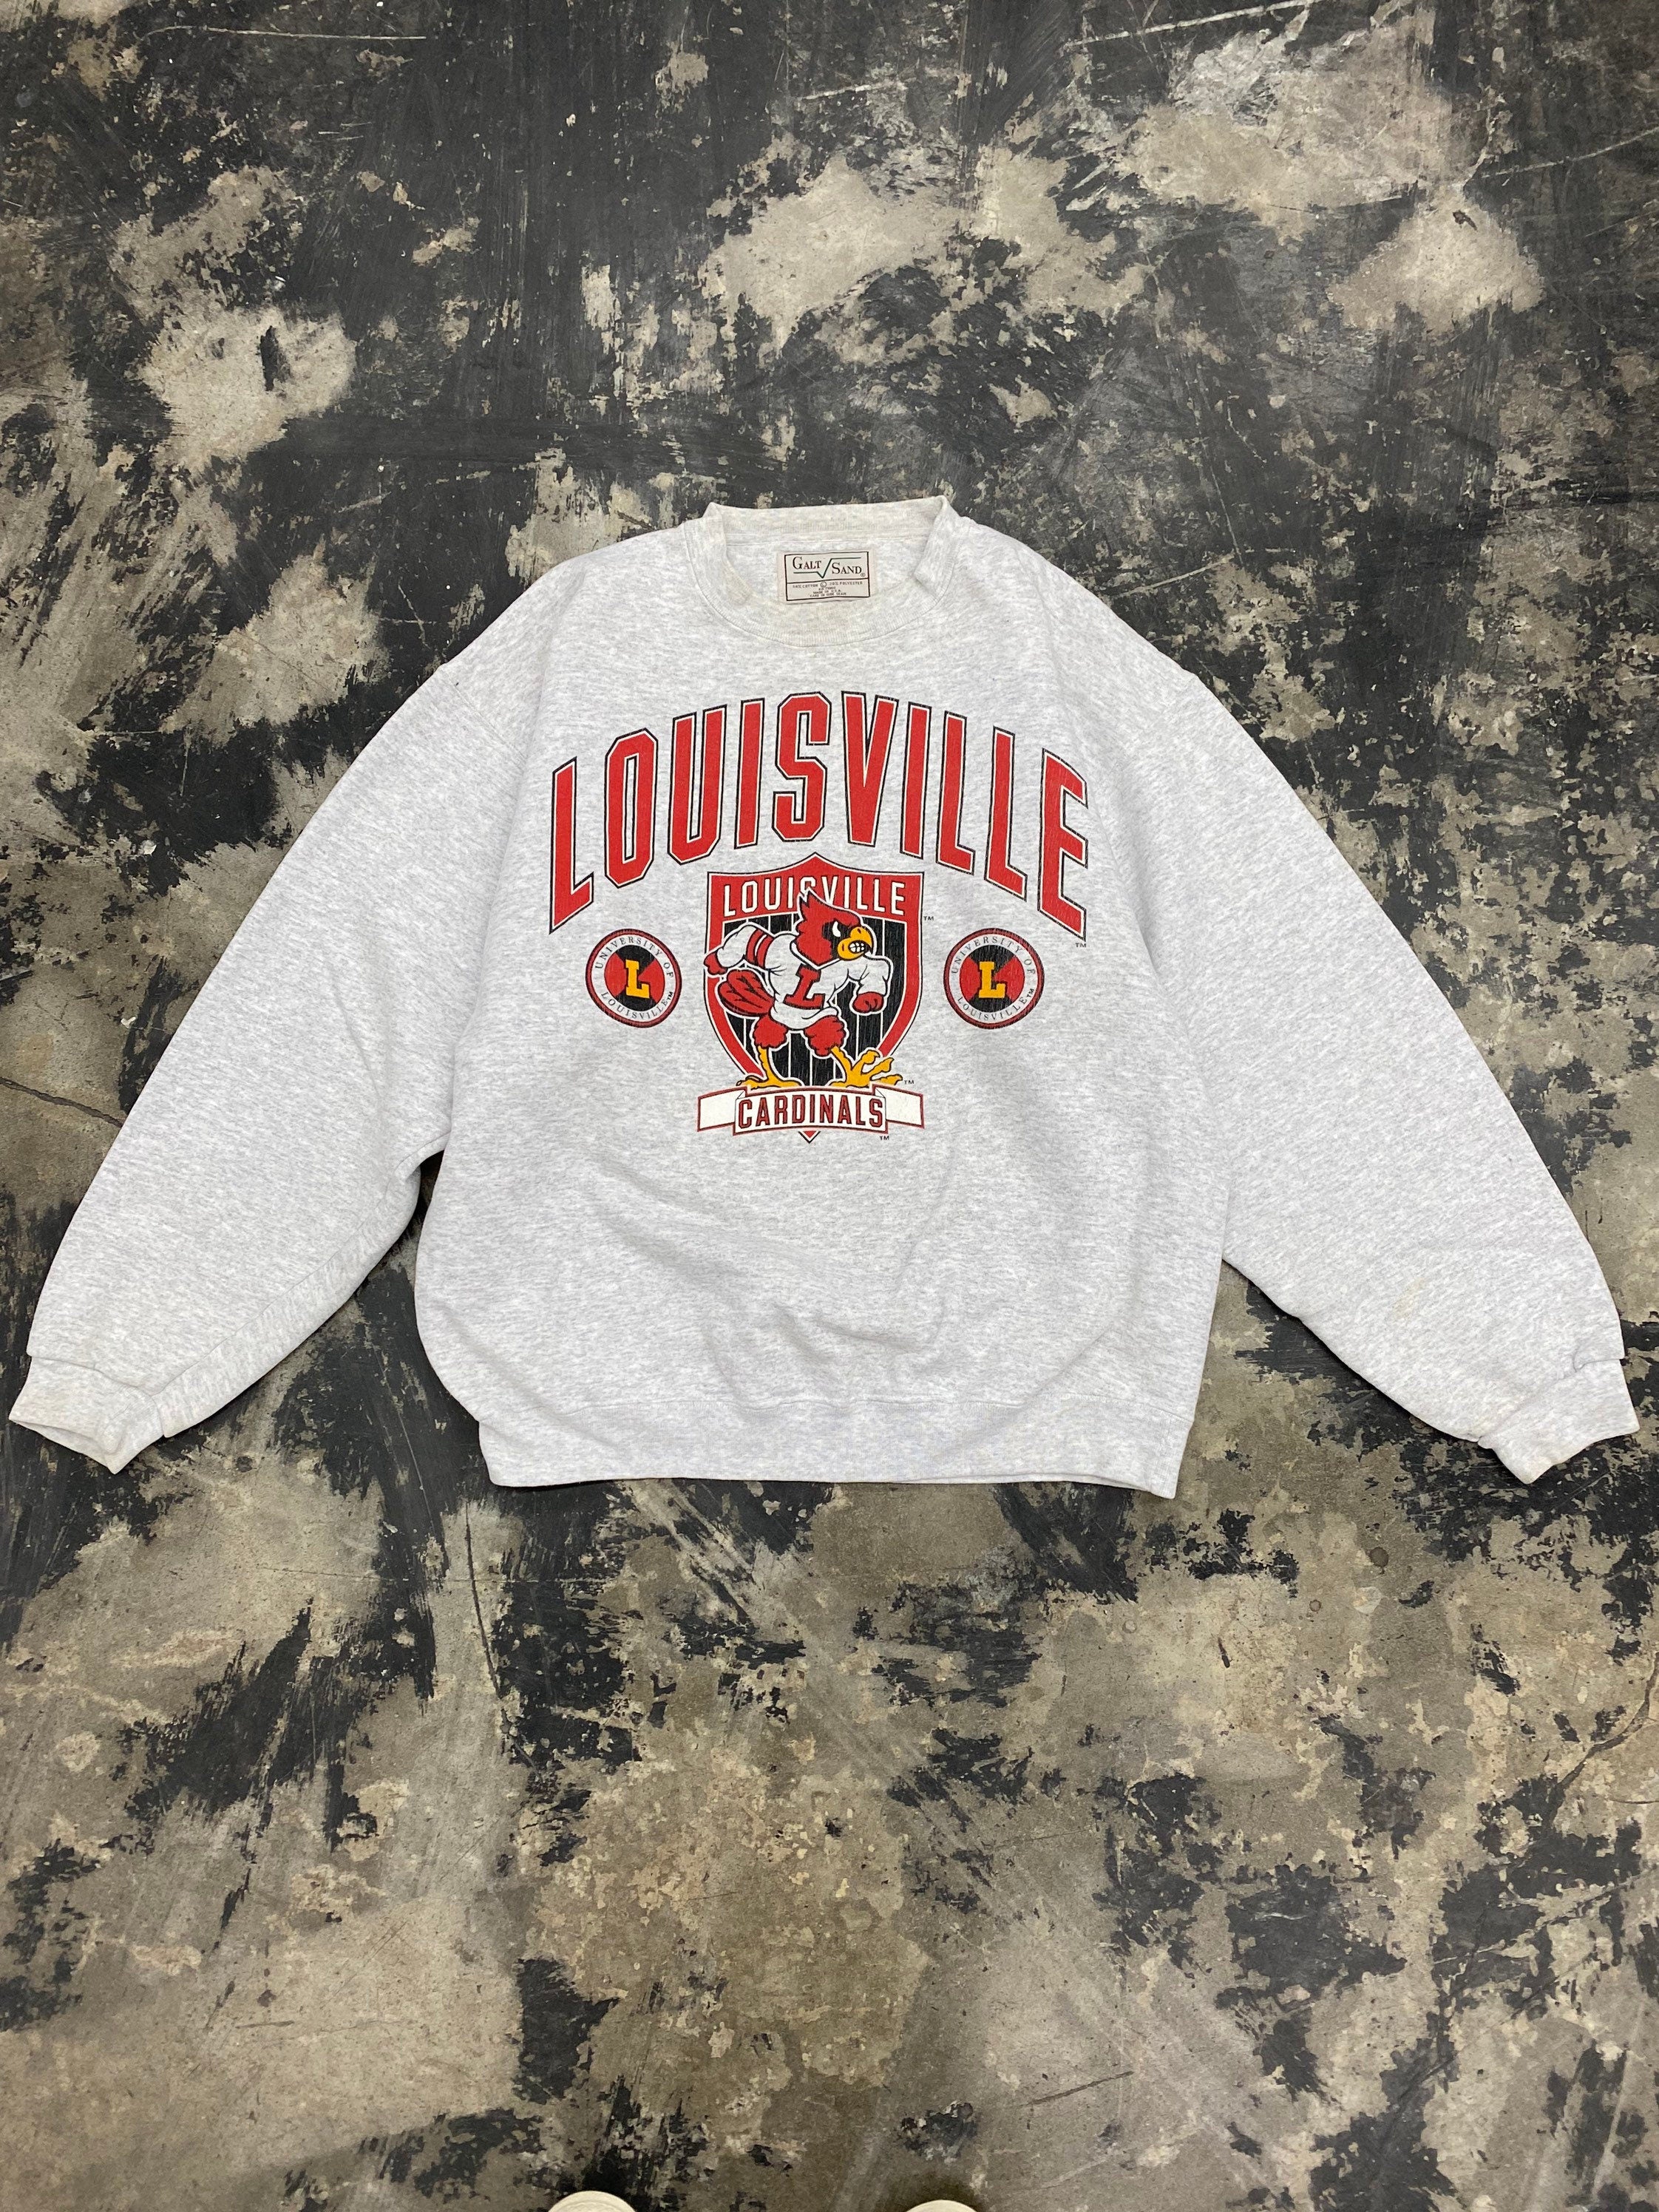 Vintage University of Louisville Sweatshirt - 3XL